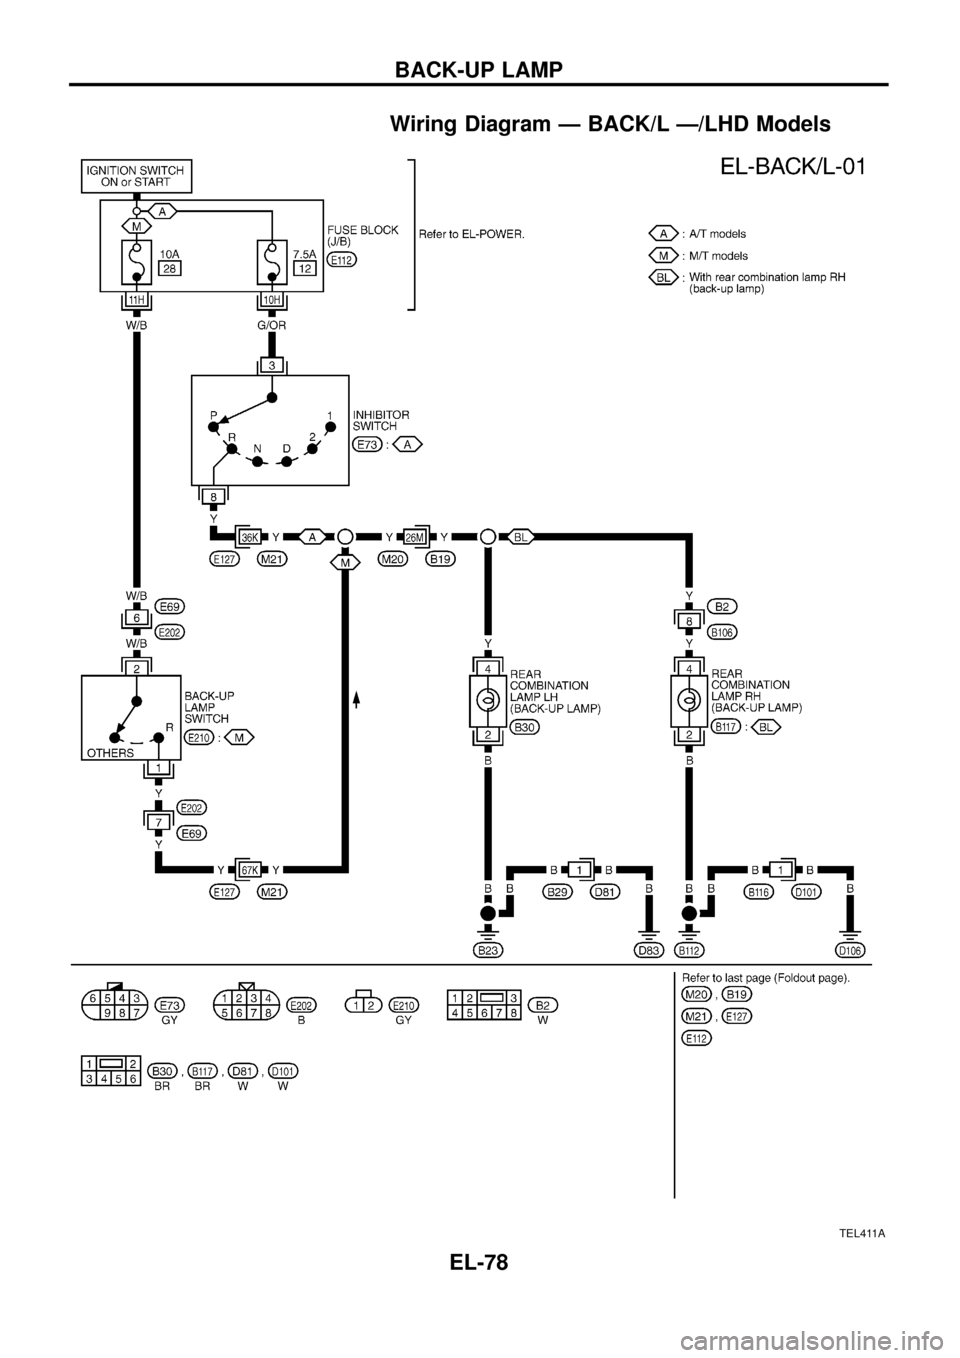 NISSAN PATROL 1998 Y61 / 5.G Electrical System Owners Manual Wiring Diagram Ð BACK/L Ð/LHD Models
TEL411A
BACK-UP LAMP
EL-78 